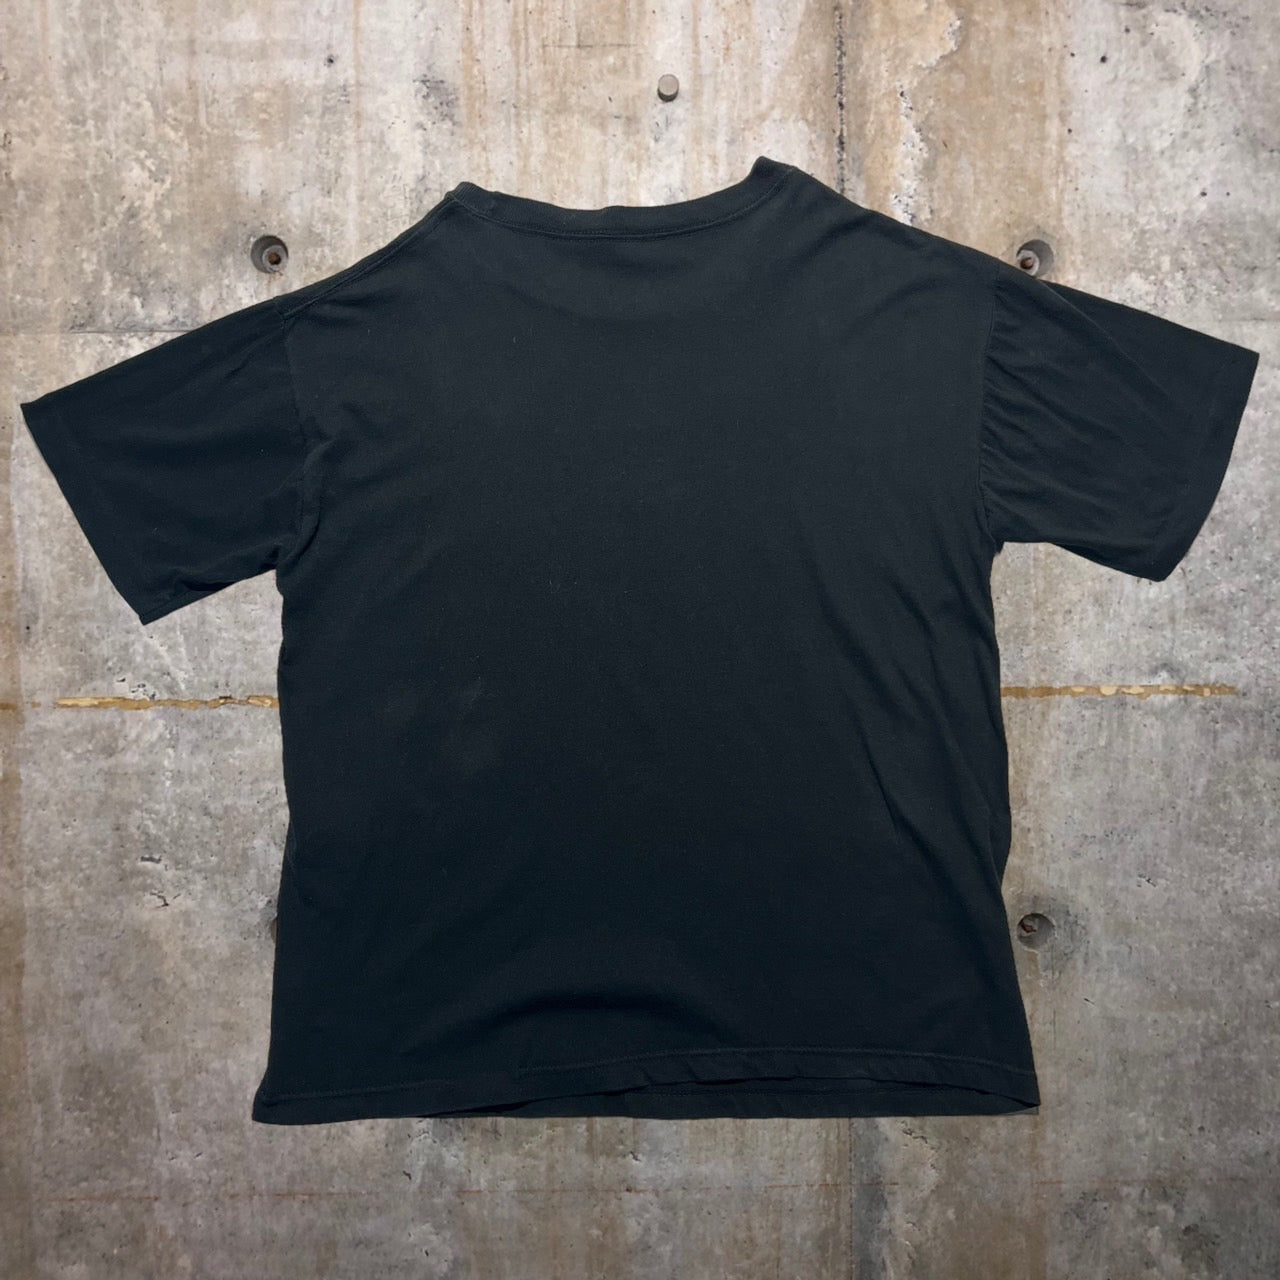 Hard Rock Cafe(ハードロックカフェ) 90'sオーバーサイズTシャツ サイズ消え(XLサイズ程度)